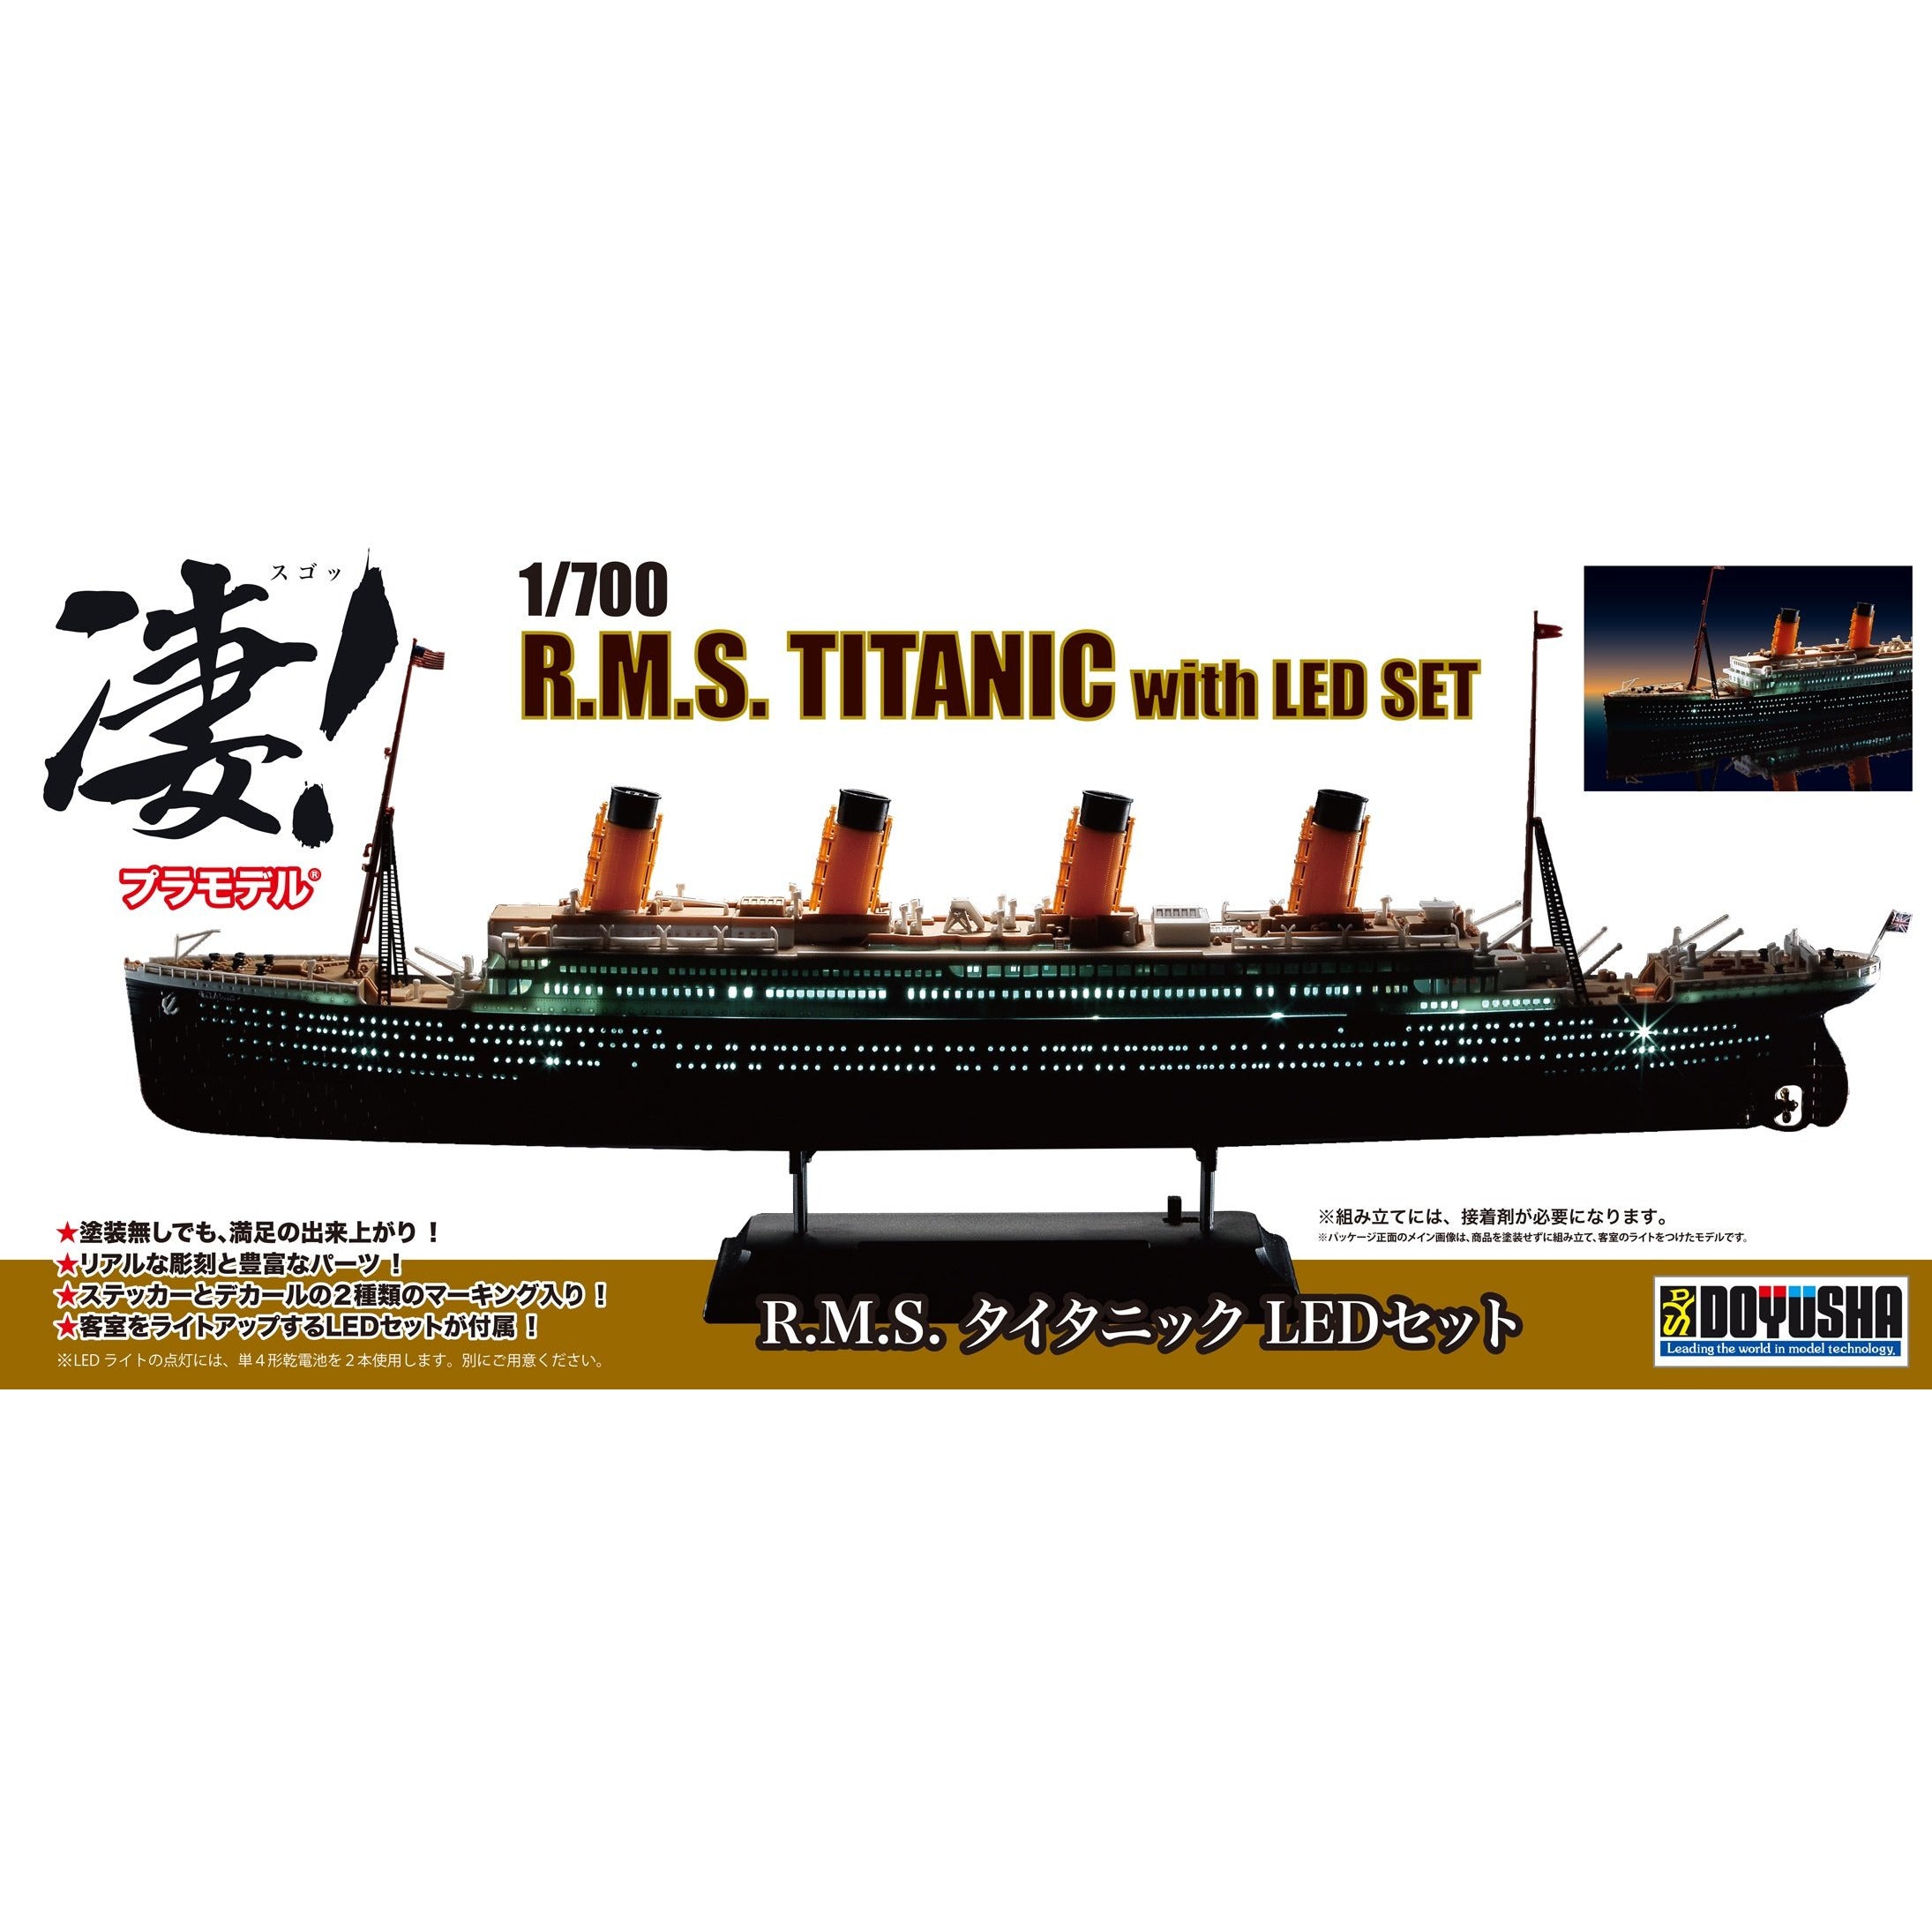 R.M.S. Titanic with LED Set 1/700 Model Ship Kit #22 by Doyusha